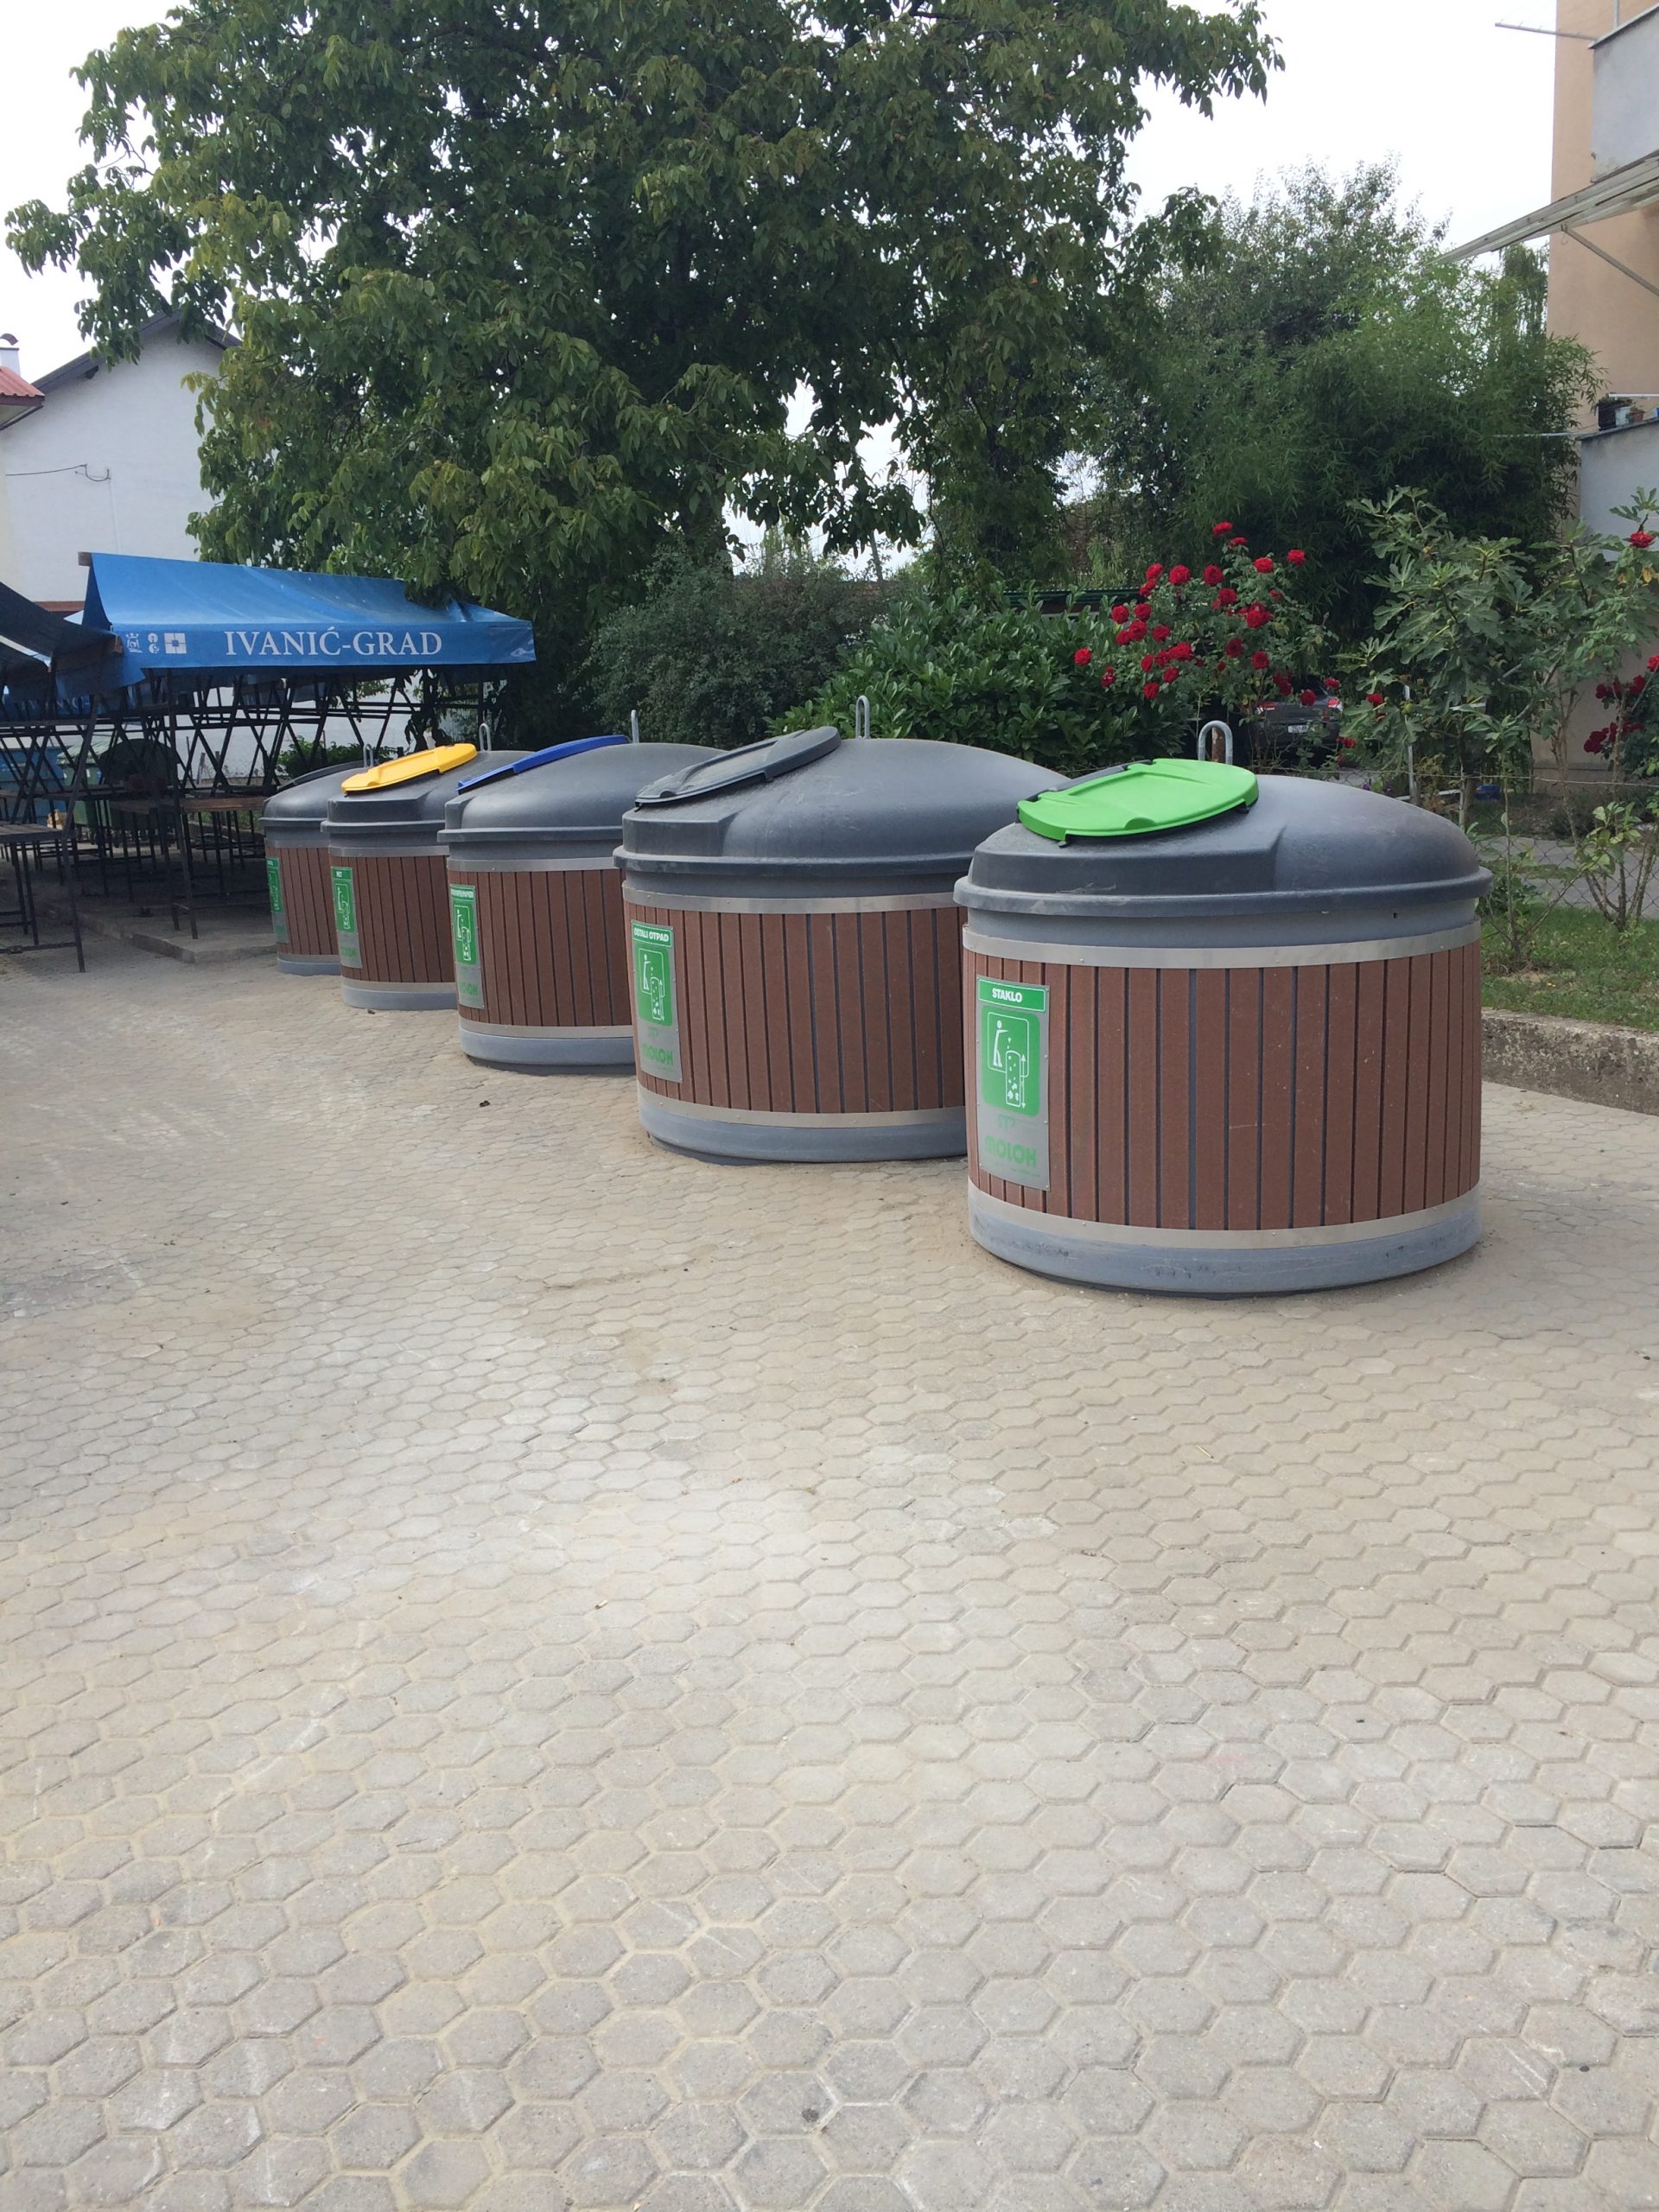 Polupodzemni kontejneri Molok na tržnici Maznica u Ivanić-Gradu